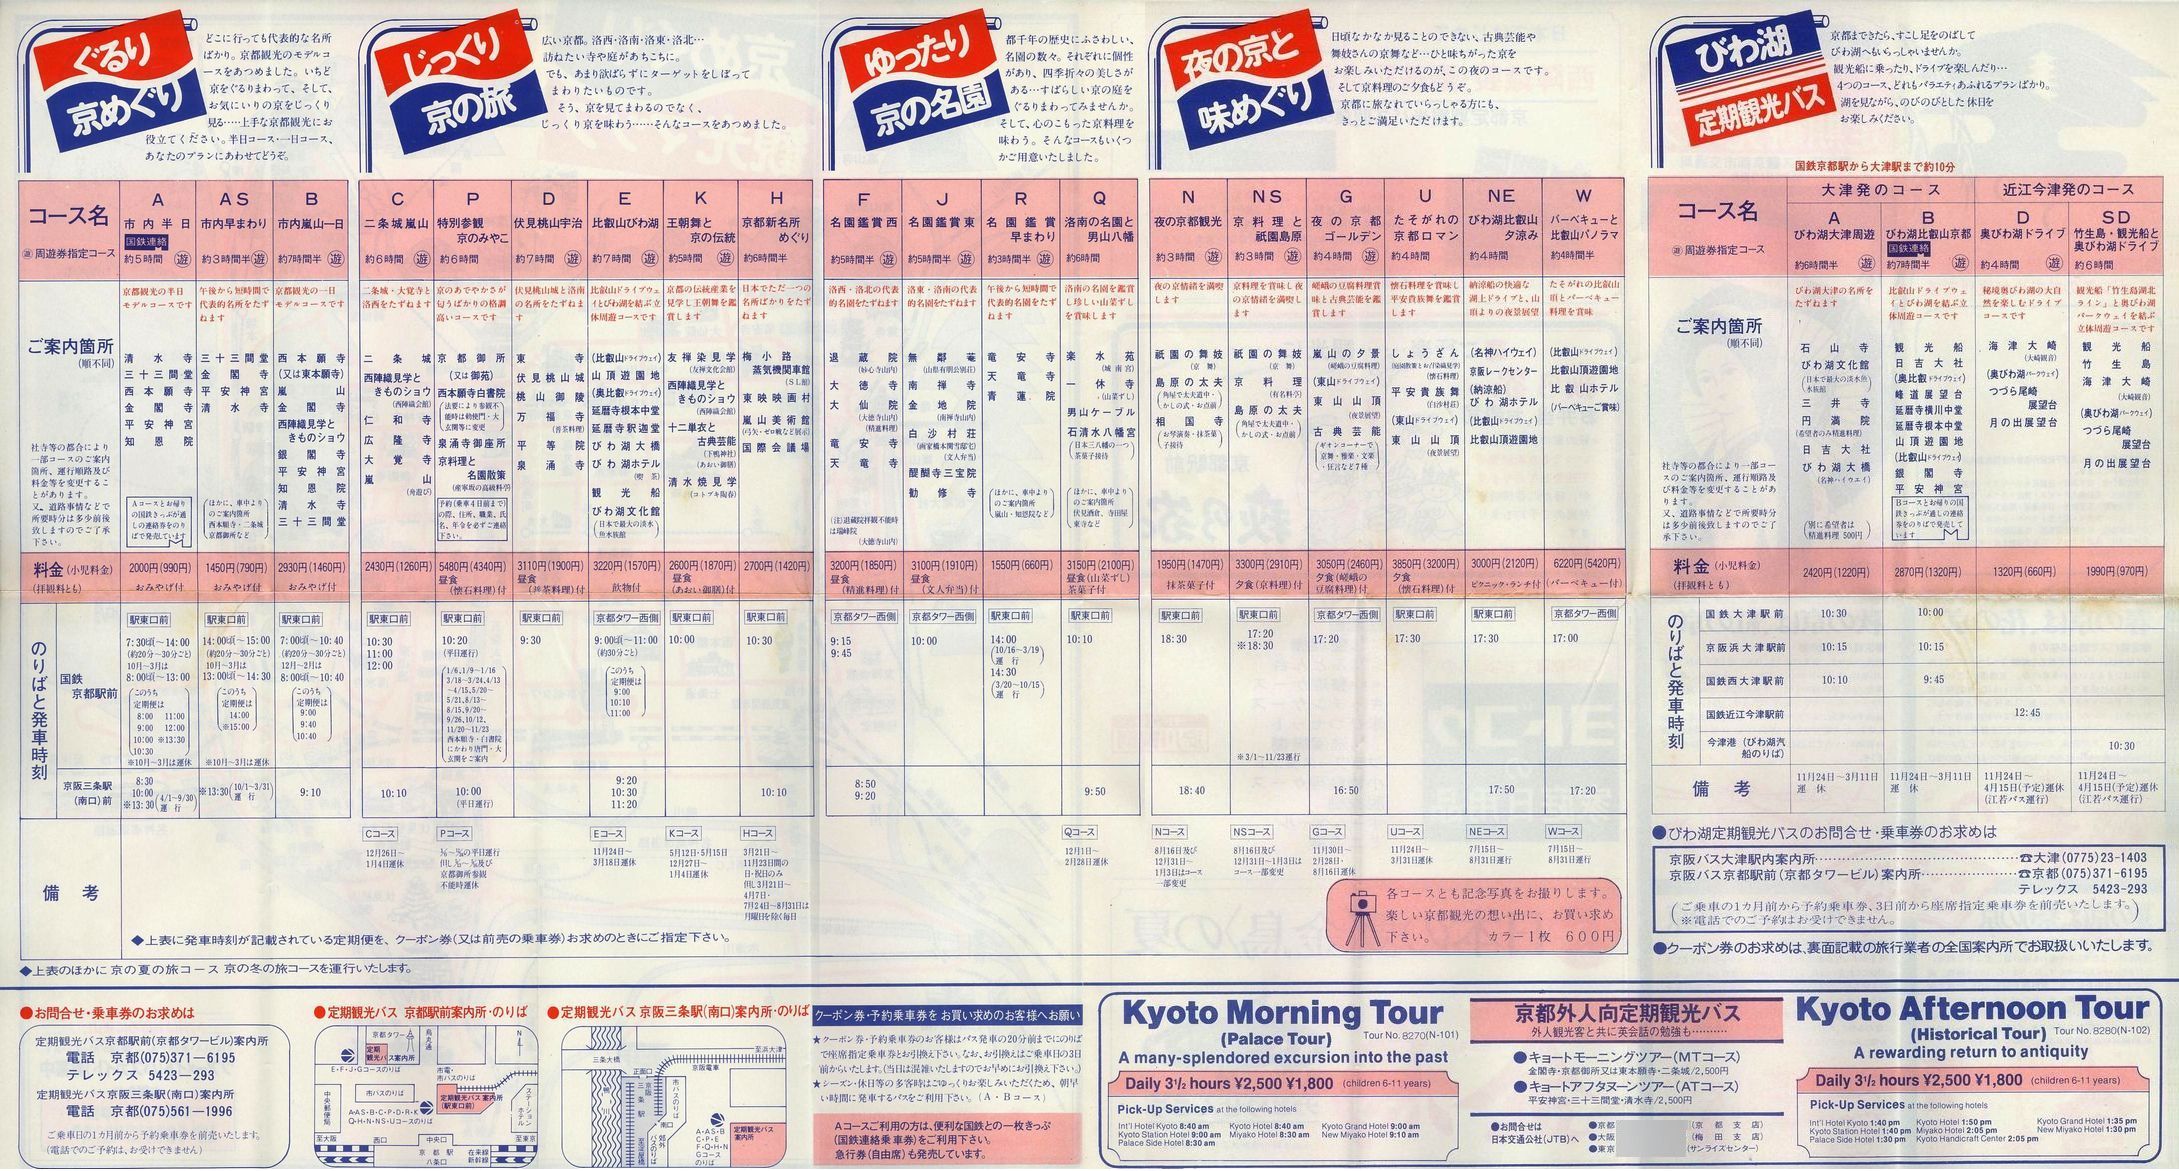 1978-05-01現在_京阪バス・京都市交通局_京都定期観光バスチラシ_裏面